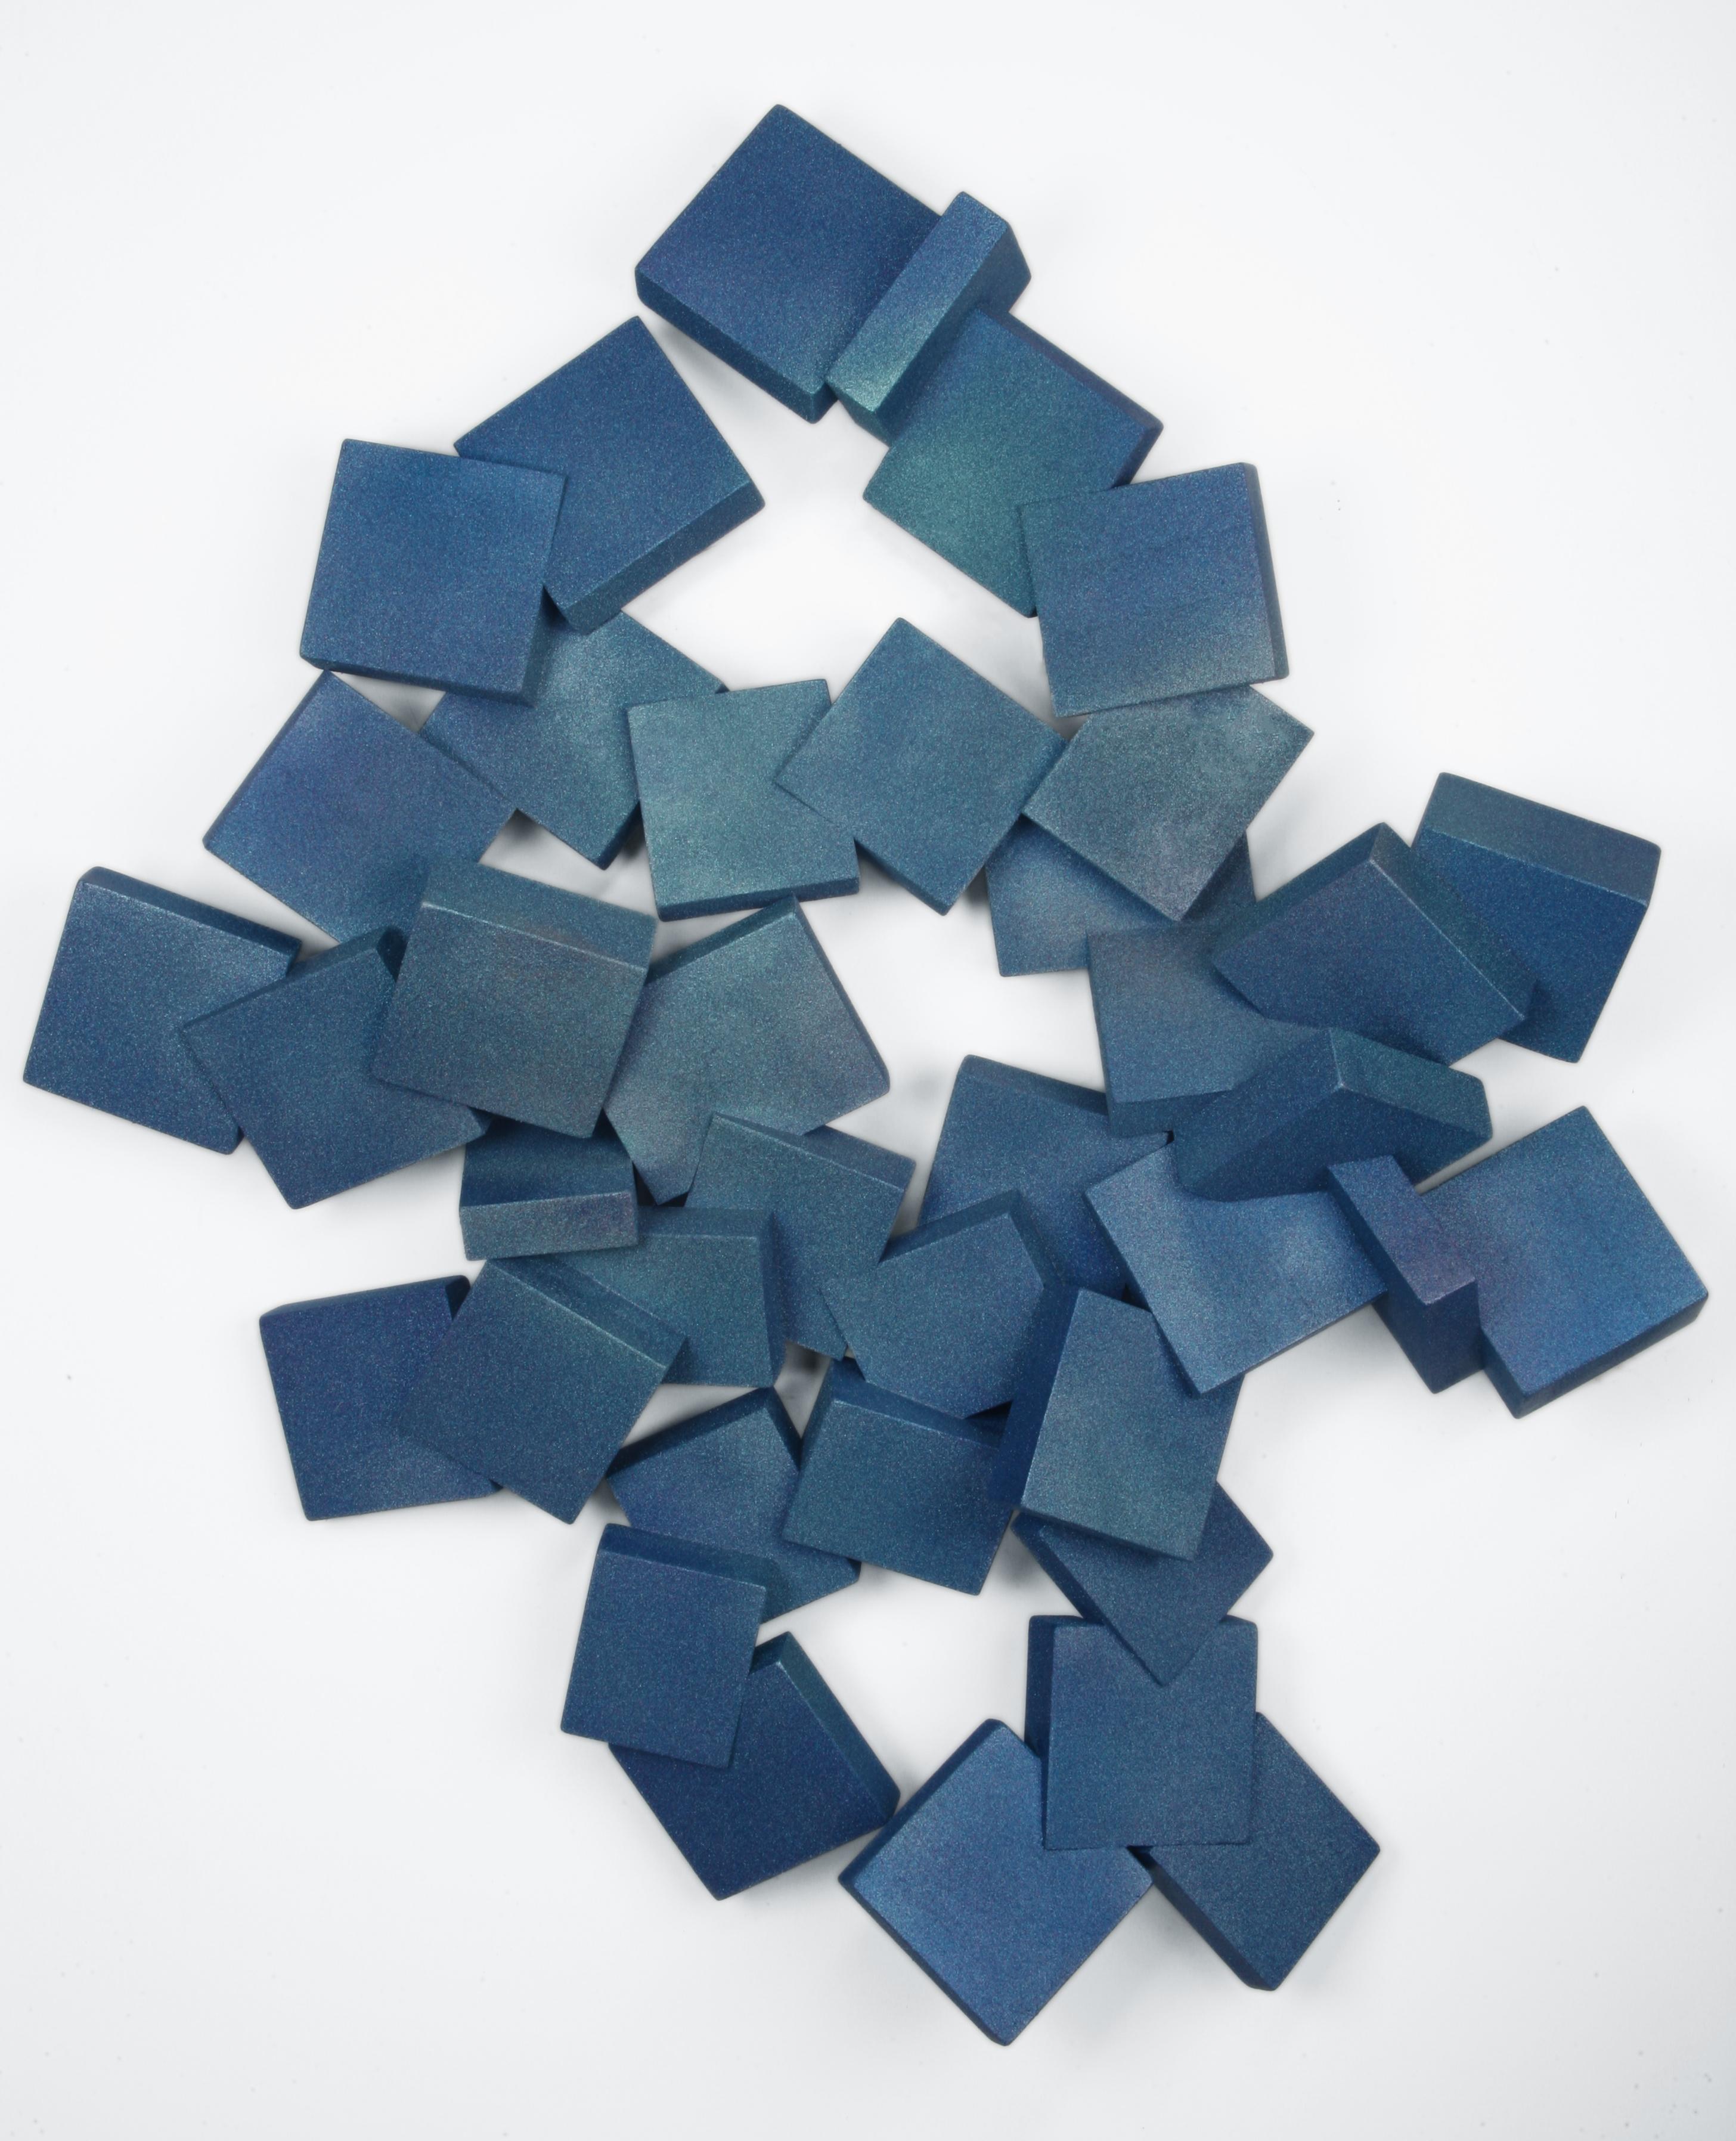 Sapphire Pyrites (cubic, blue, wood art, wall sculpture, contemporary design) - Mixed Media Art by Chloe Hedden